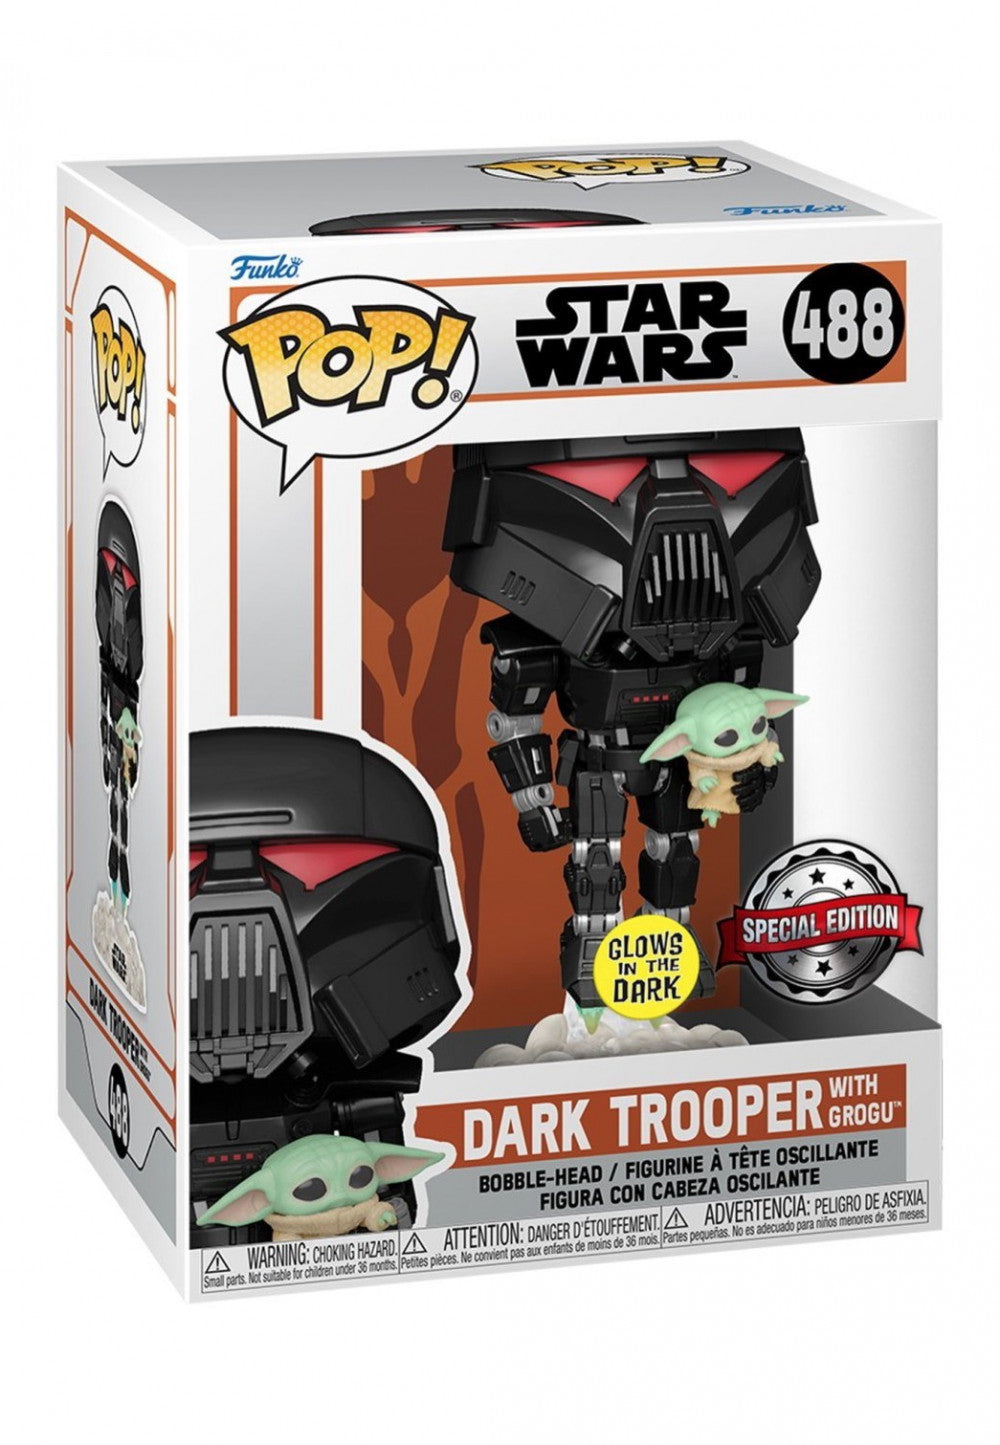 Funko Pop! Star Wars 488 - The Mandalorian - Dark Trooper with Grogu (2021) (GITD) Special Edition